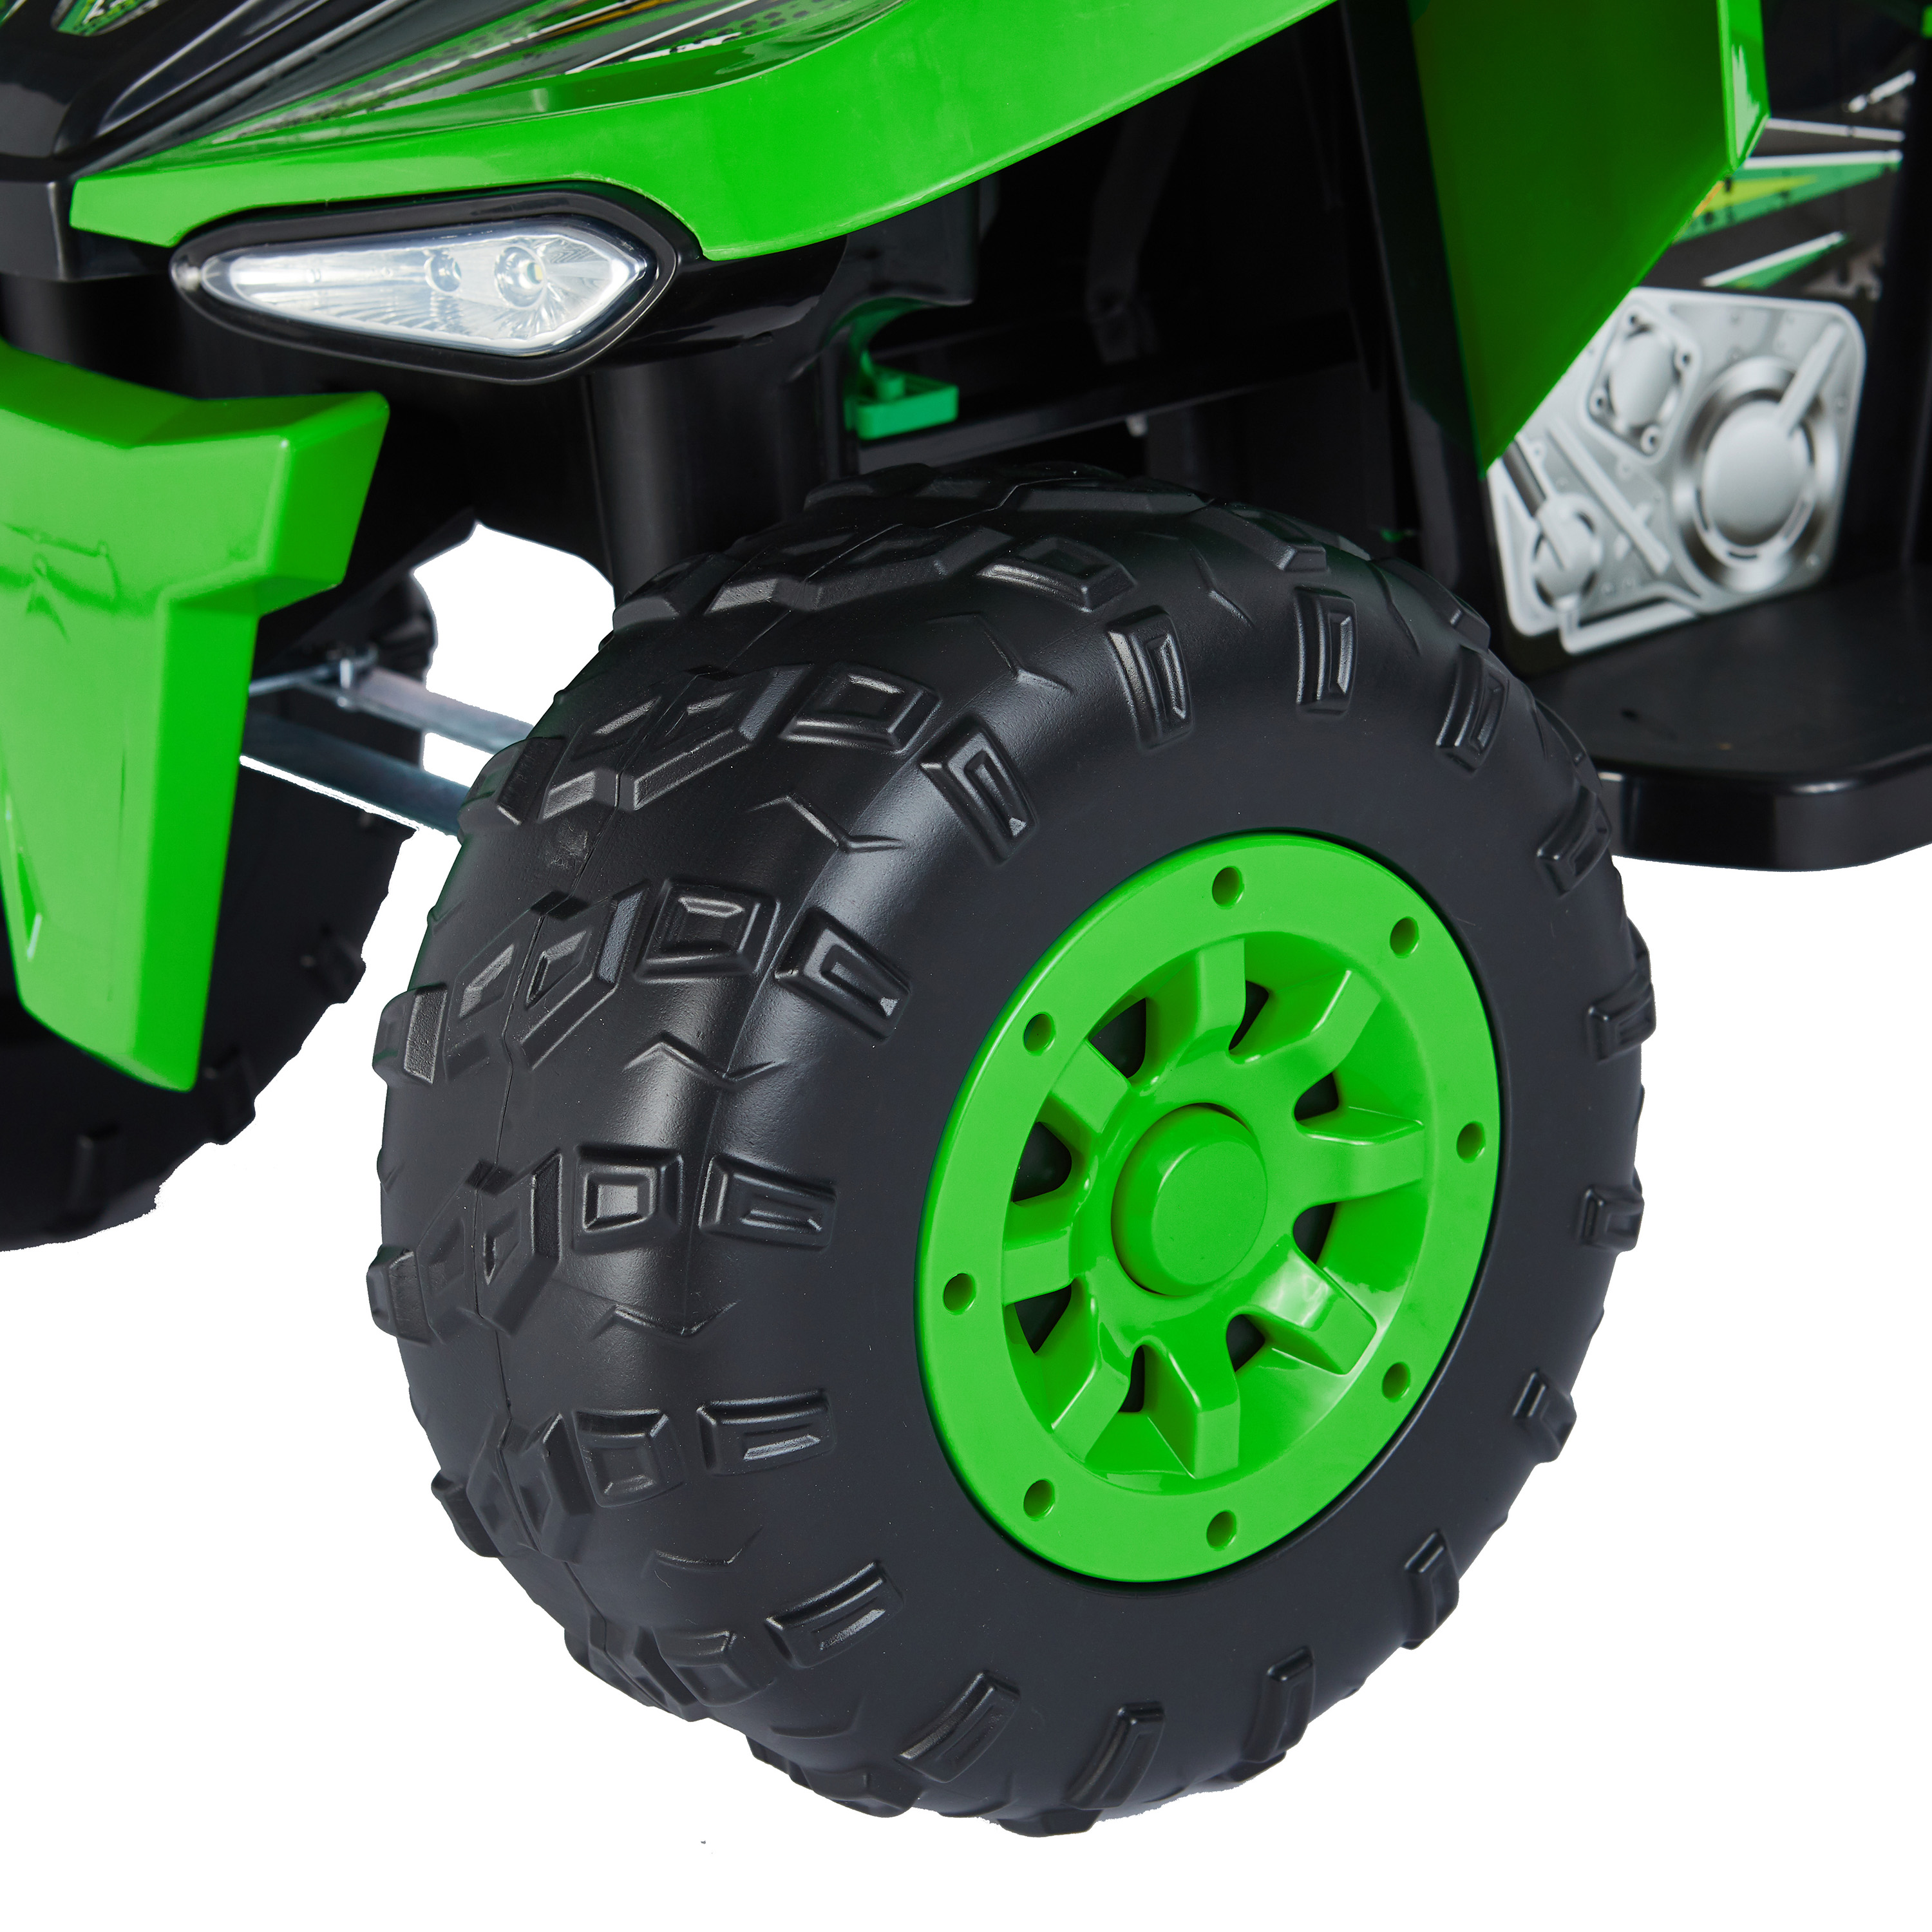 Kalee 12V Giant Quad ATV Battery Powered Ride On, Green - image 2 of 8